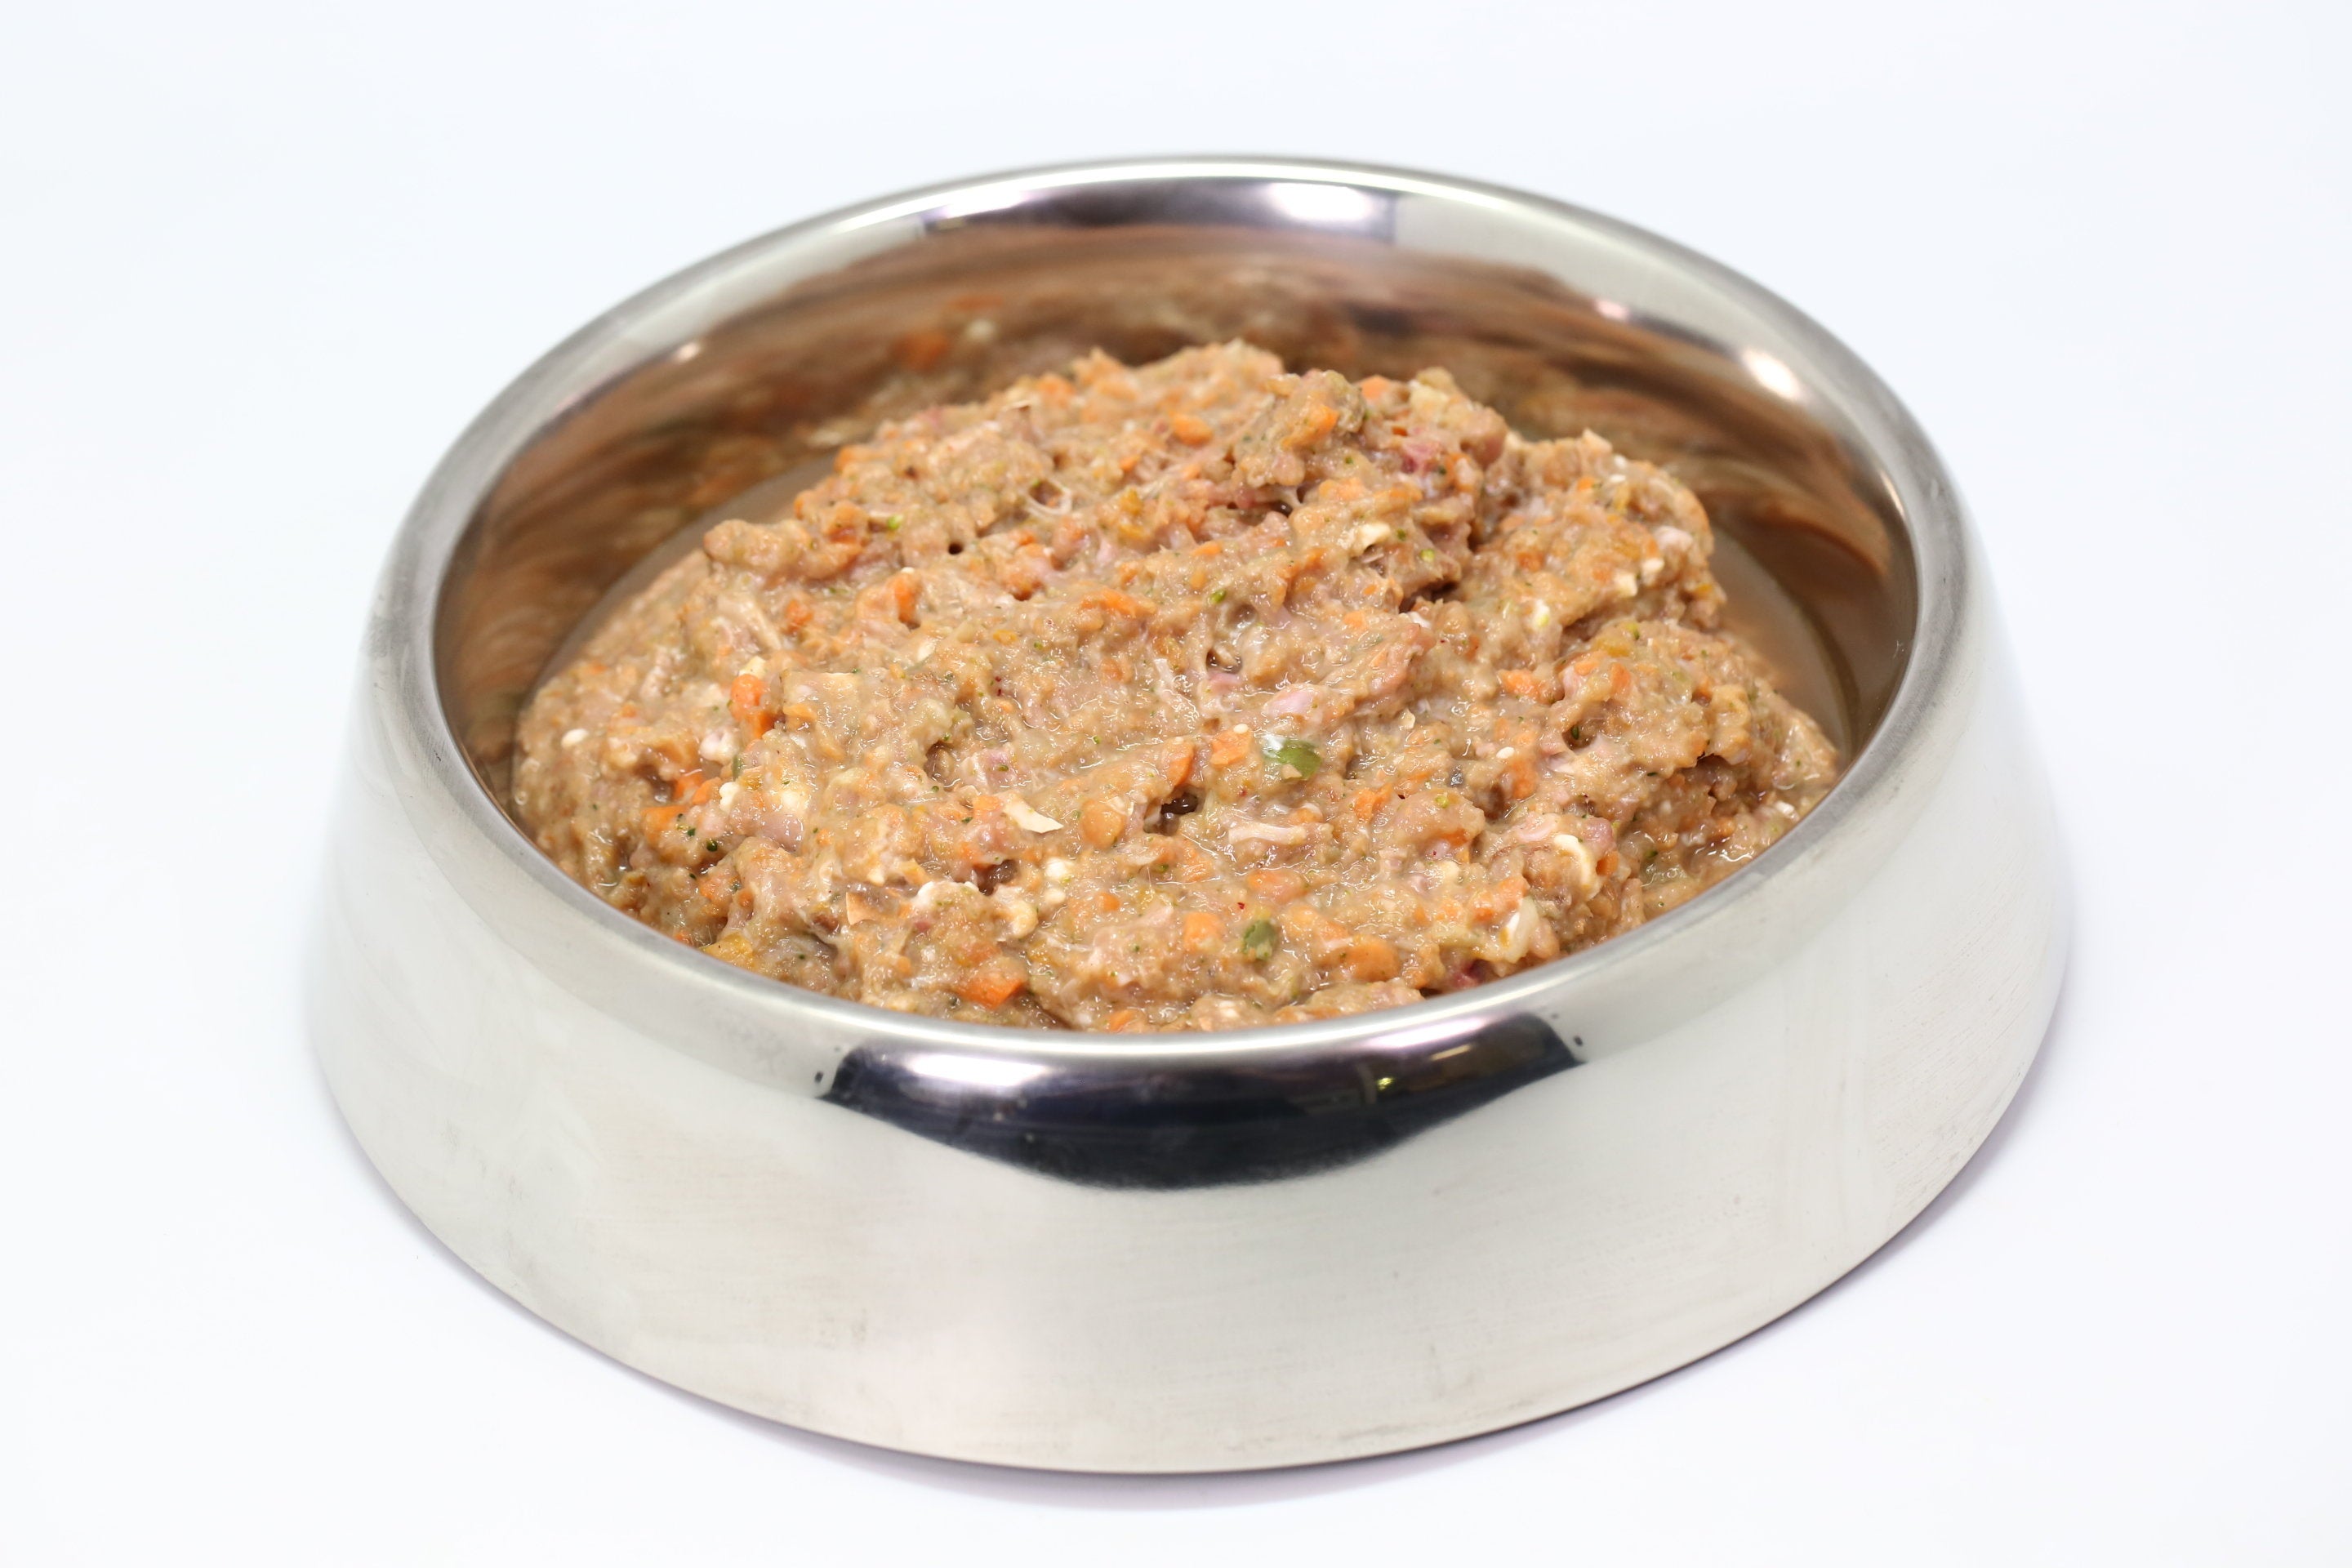 Somerford Raw & Natural - Low Purine Adult Dog Food Hunter Valley Turkey & Veg Pack + FREE Meaty Bones